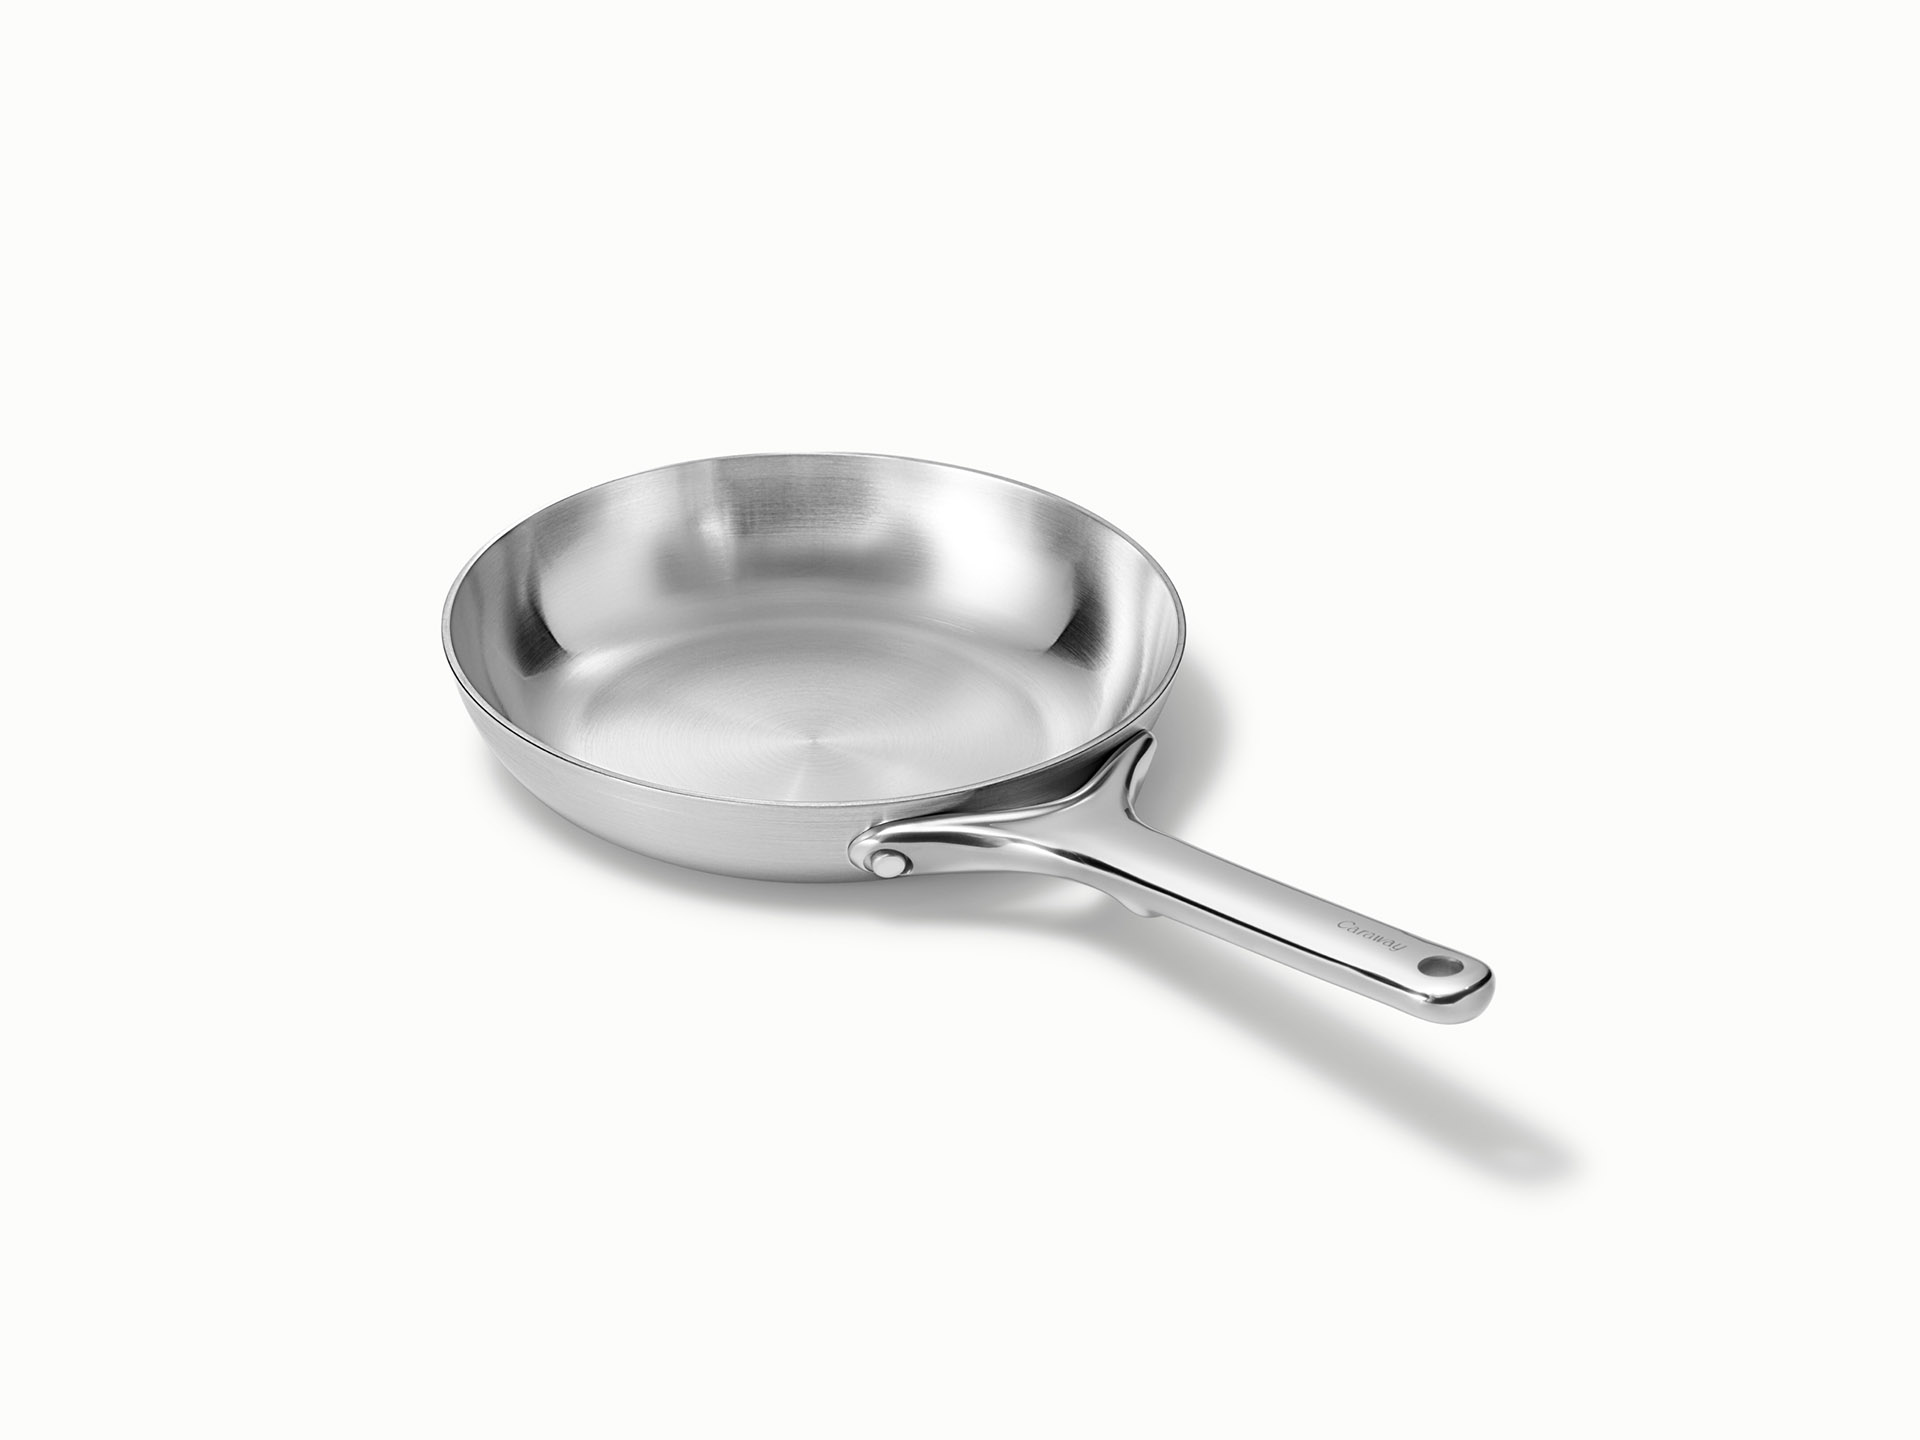 Stainless Steel Mini Fry Pan